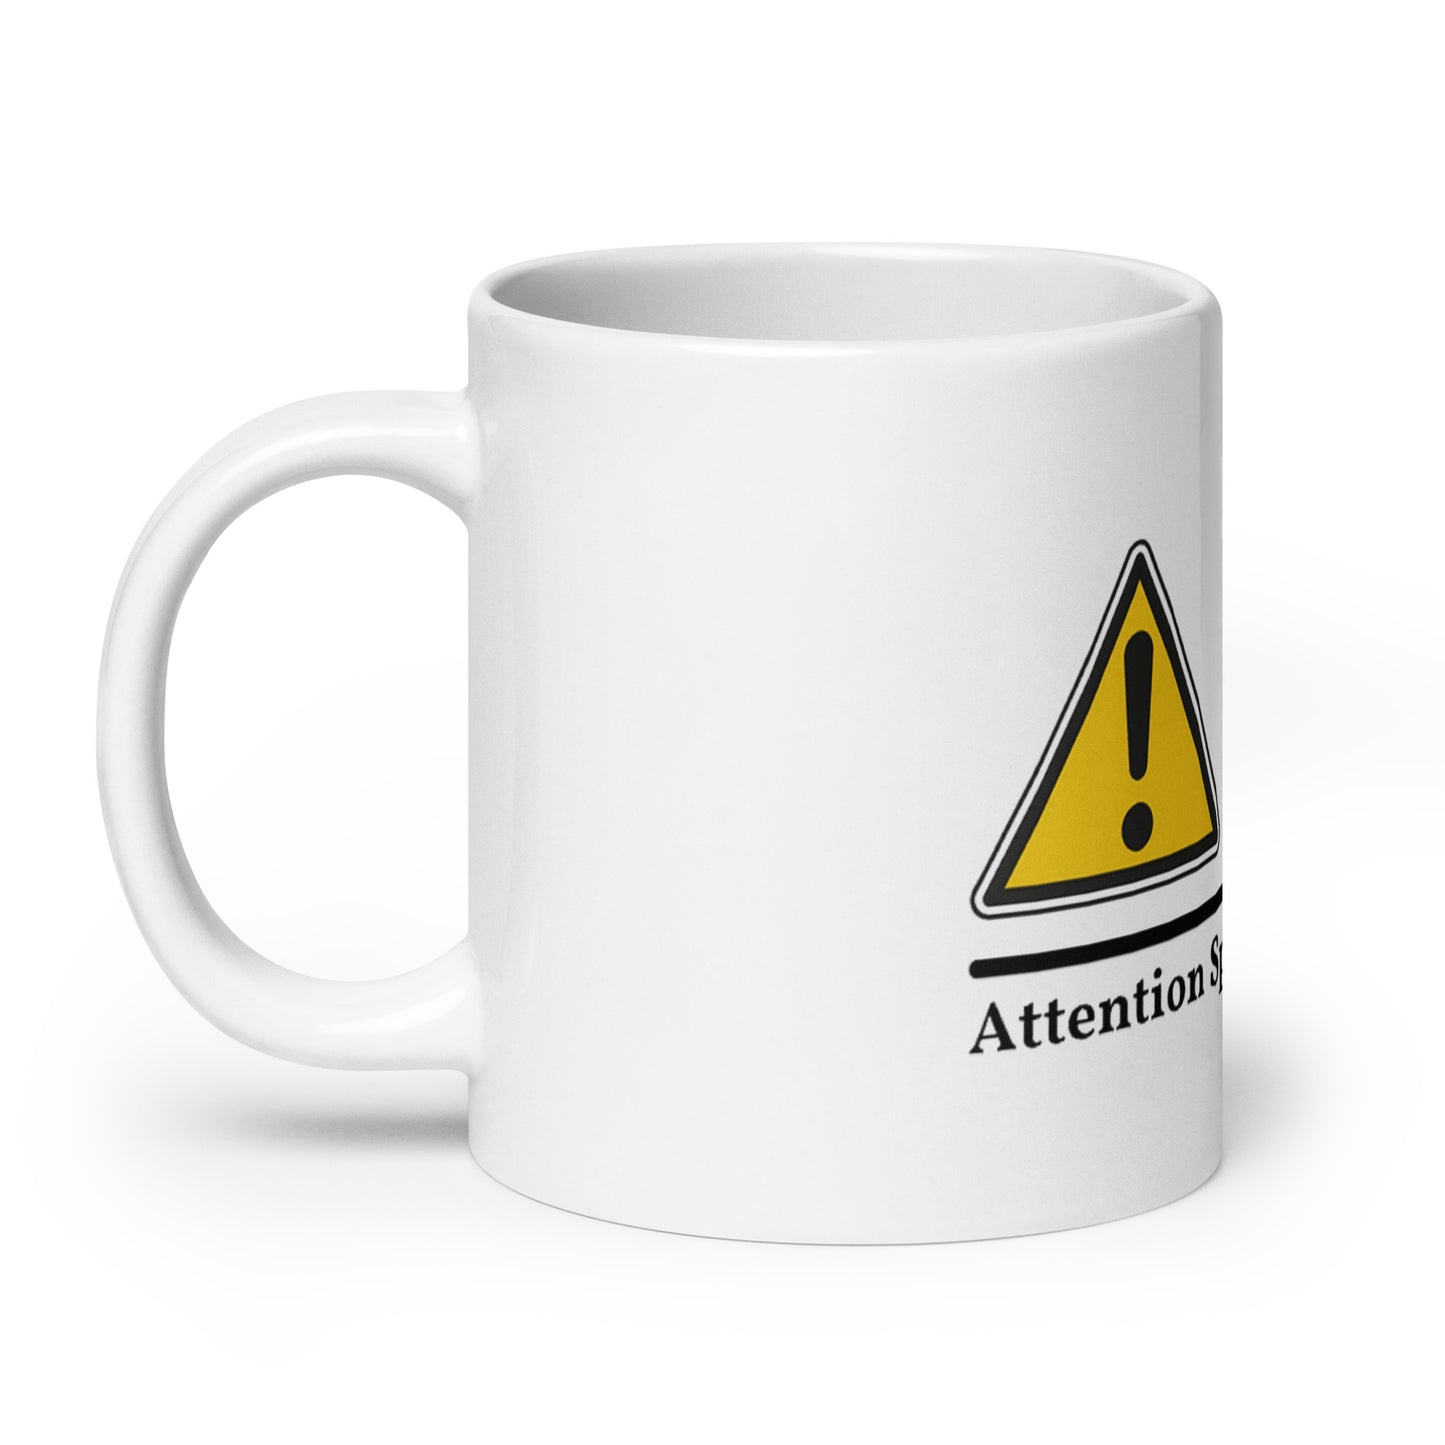 Error 404 glossy mug